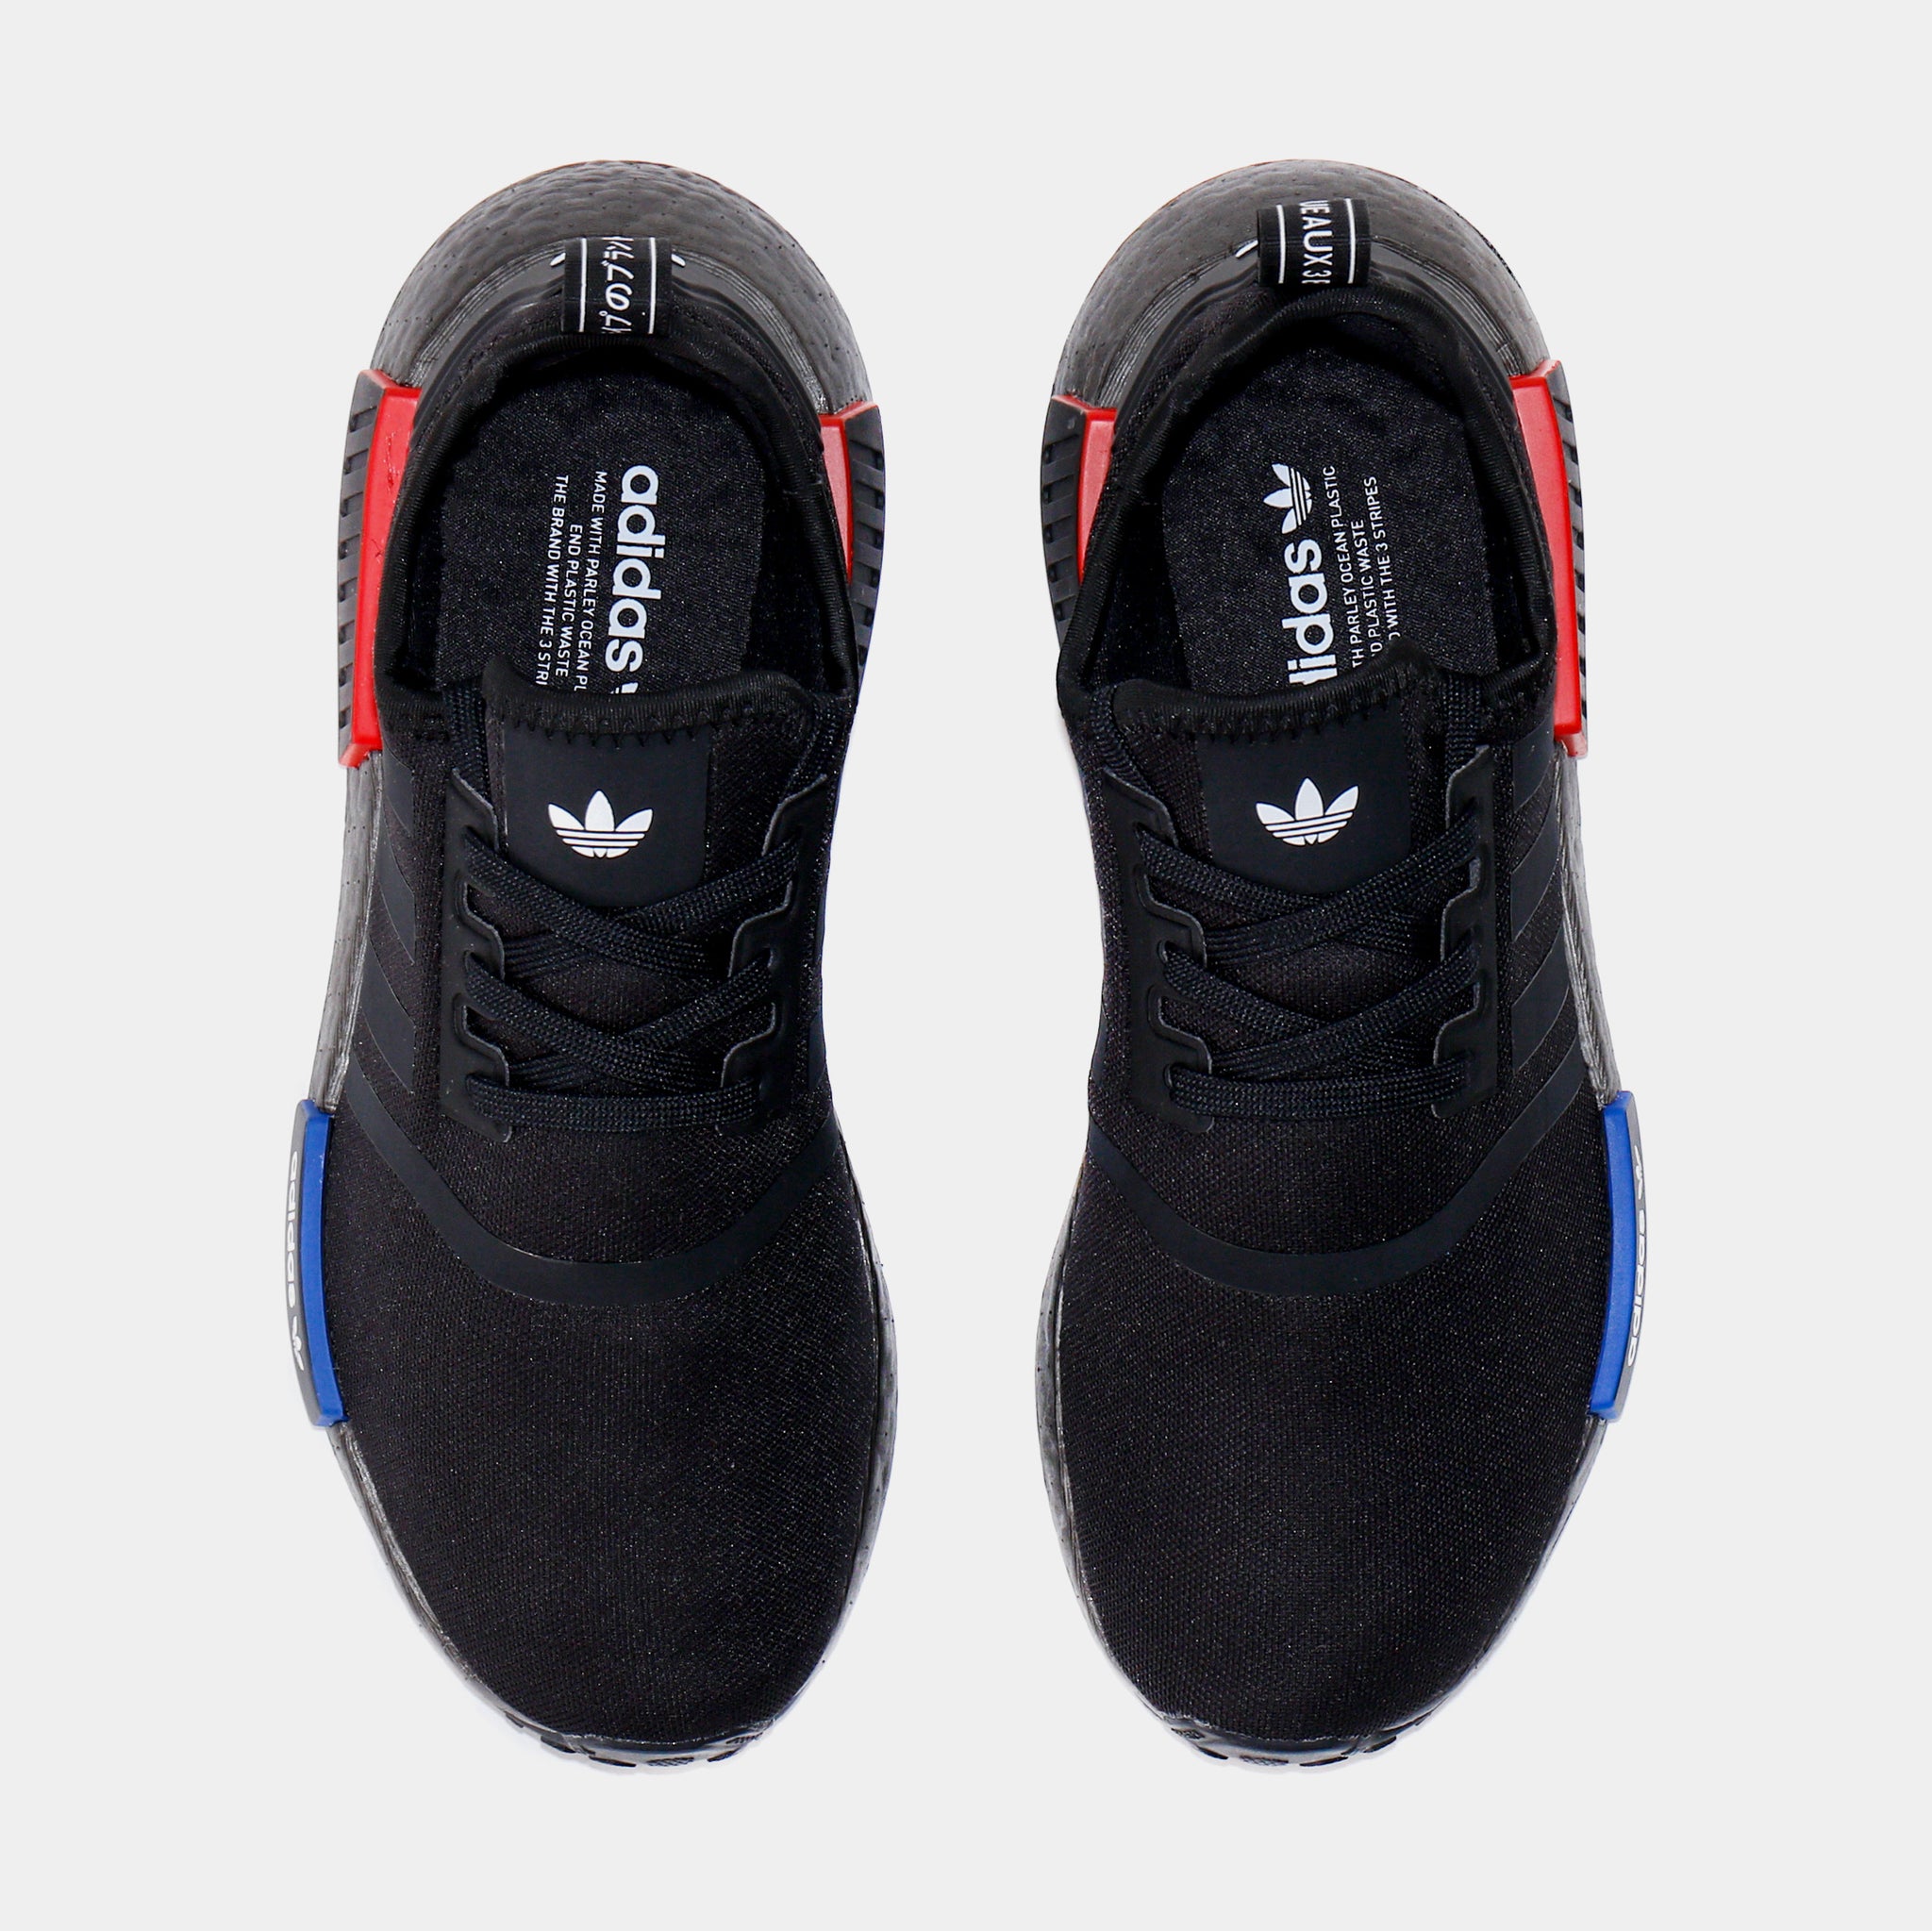 adidas R1 School Lifestyle Shoes Black GY4278 Shoe